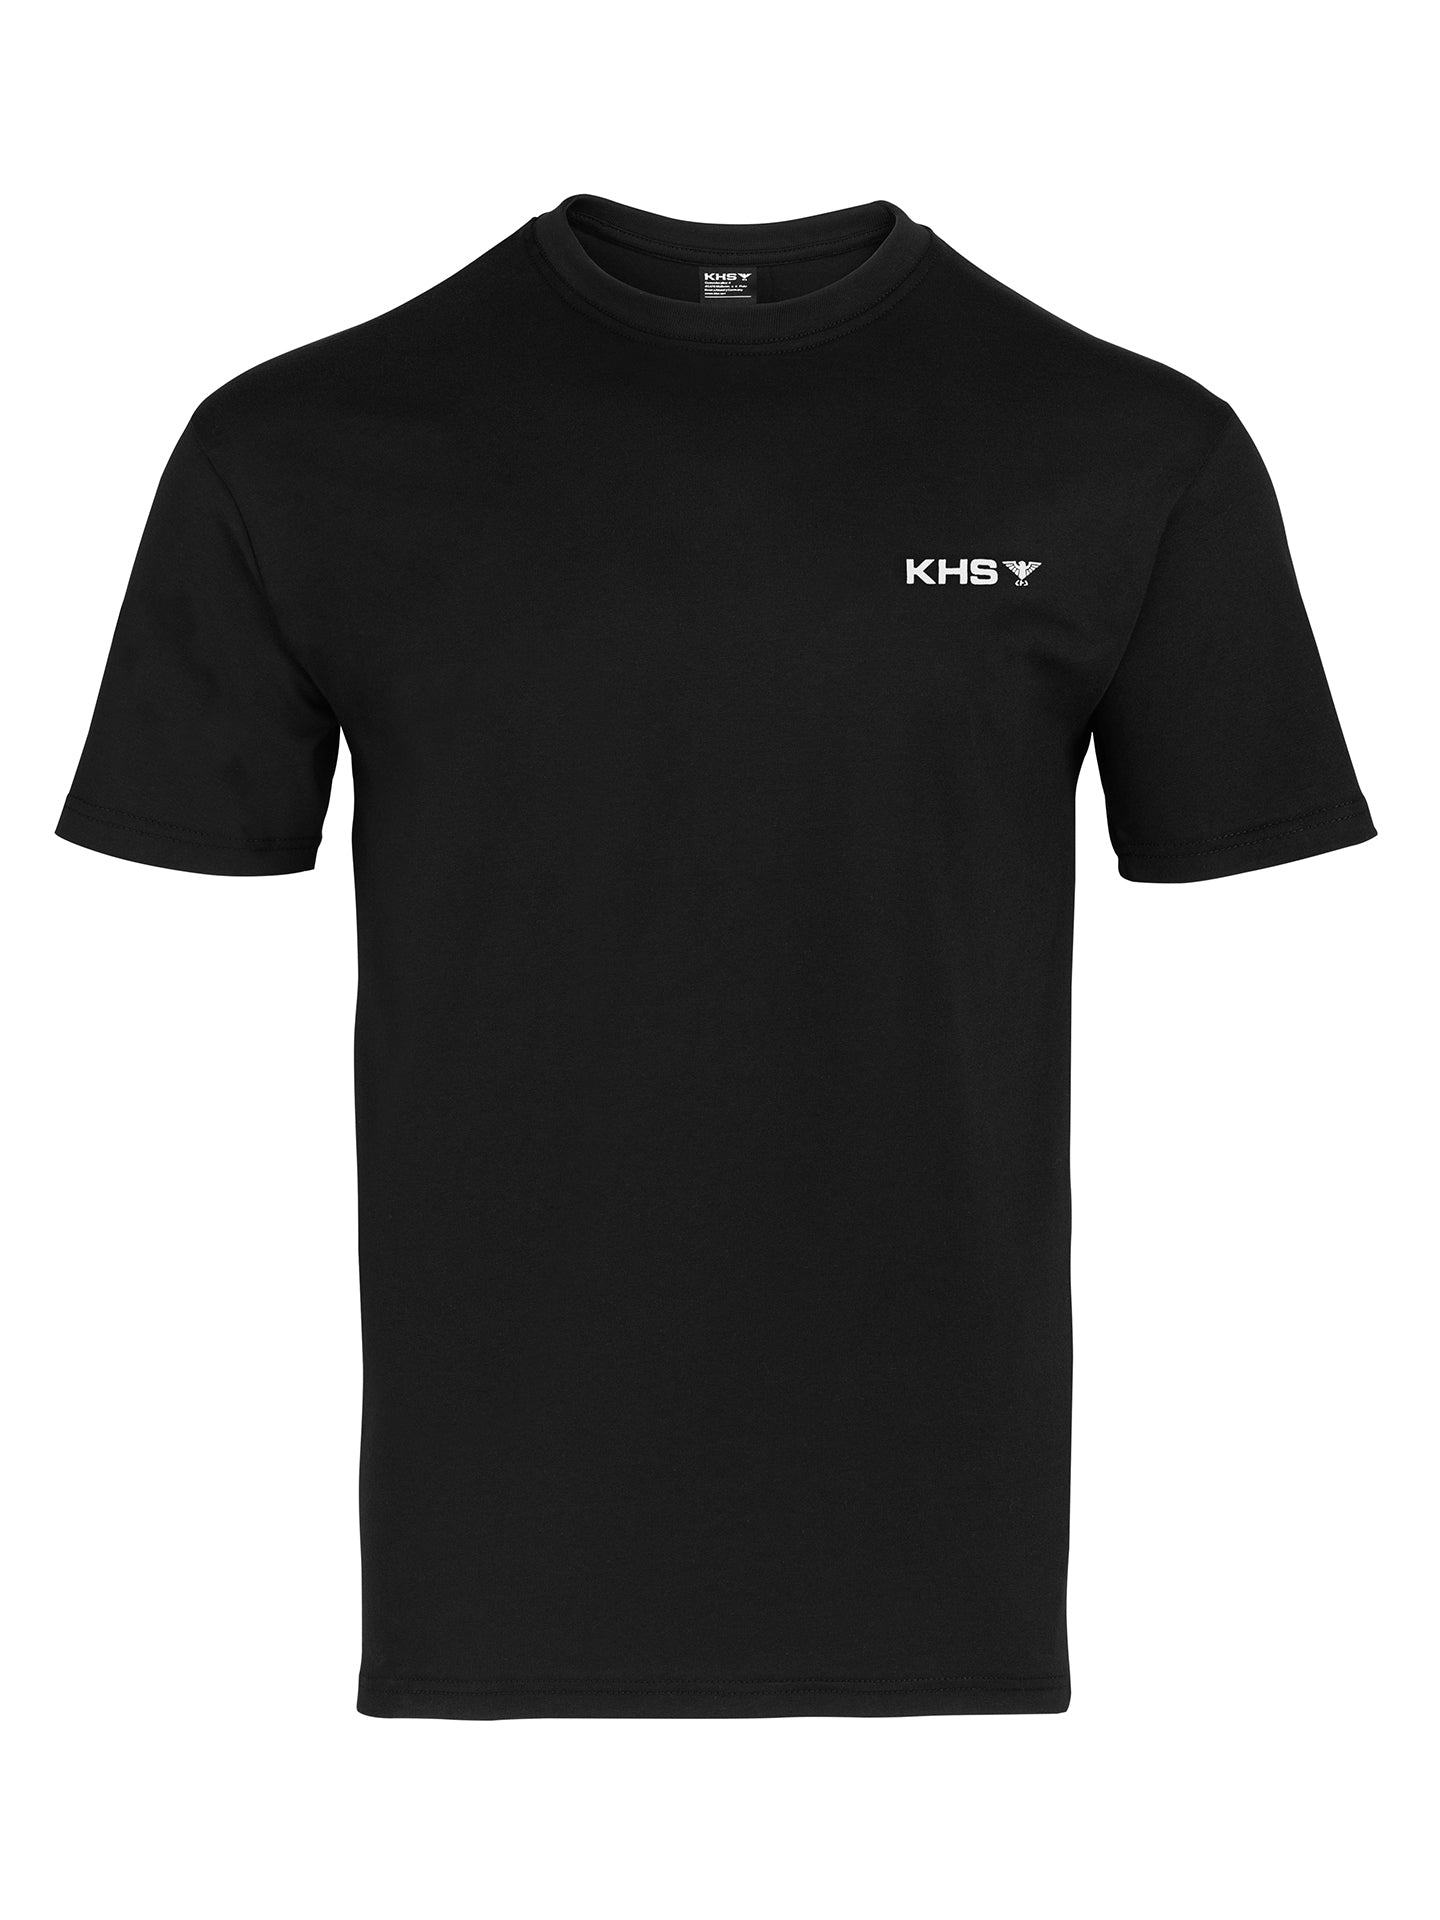 KHS T-Shirt black